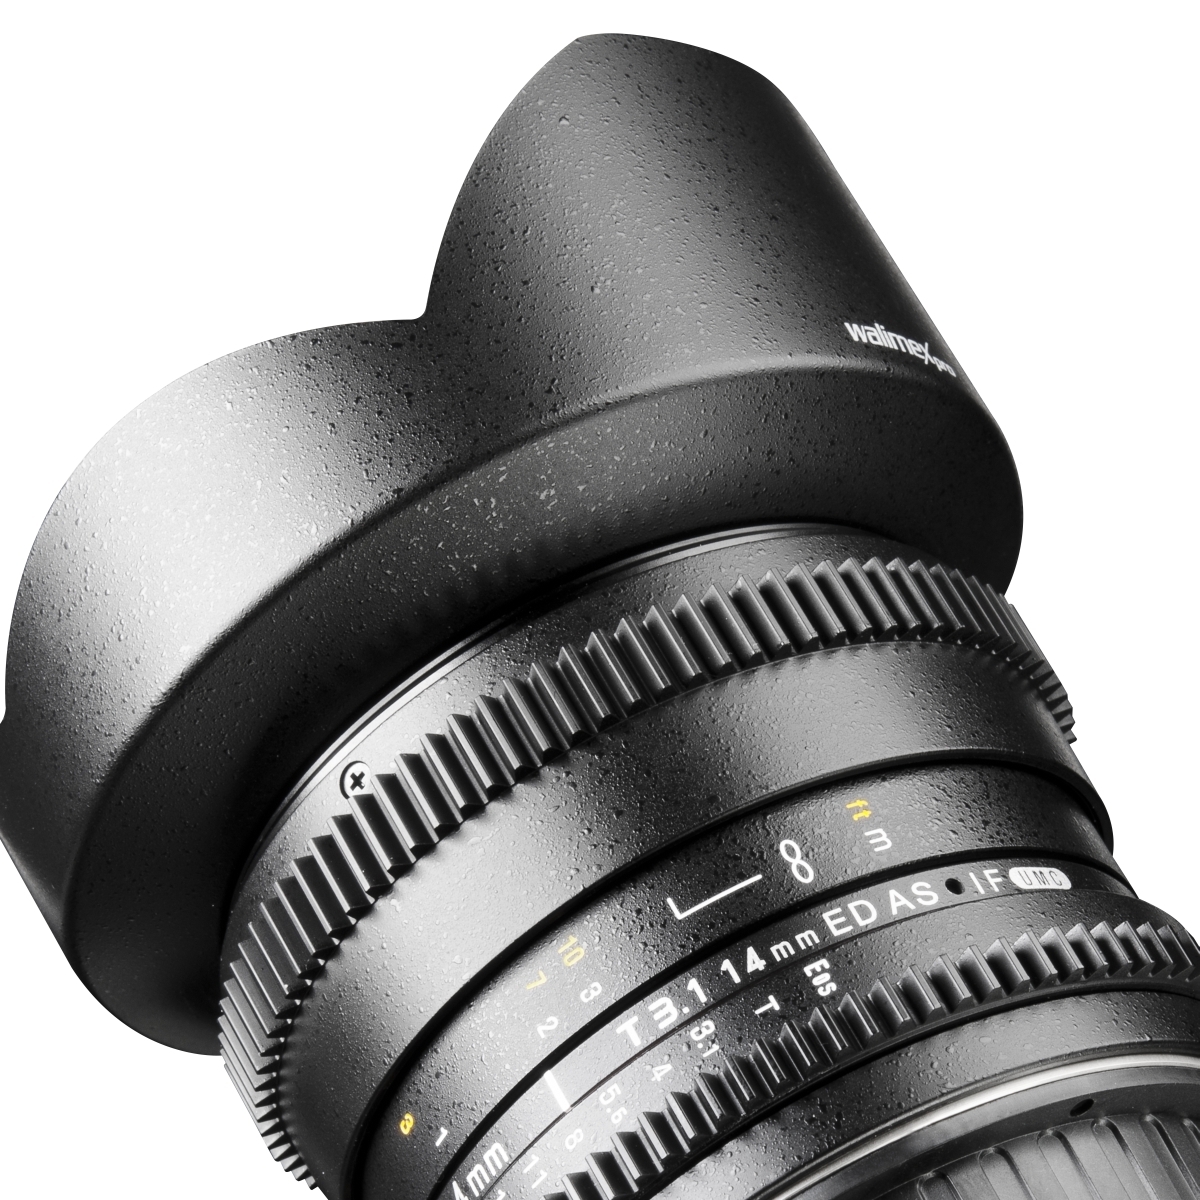 Walimex pro 14/3,1 Video DSLR Nikon F